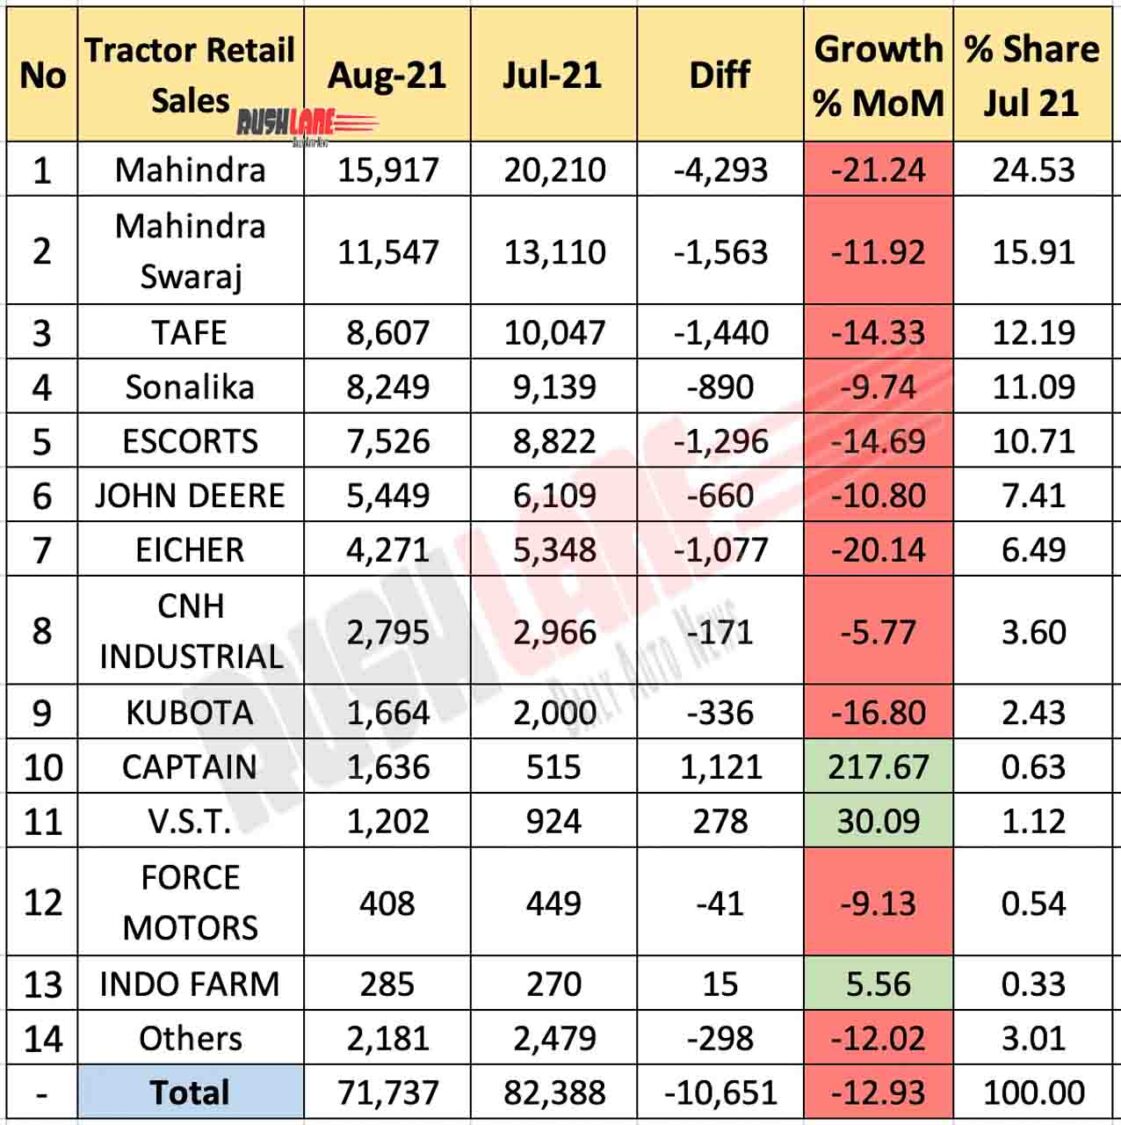 Tractor Retail Sales Aug 2021 vs Jul 2021 (MoM) - FADA